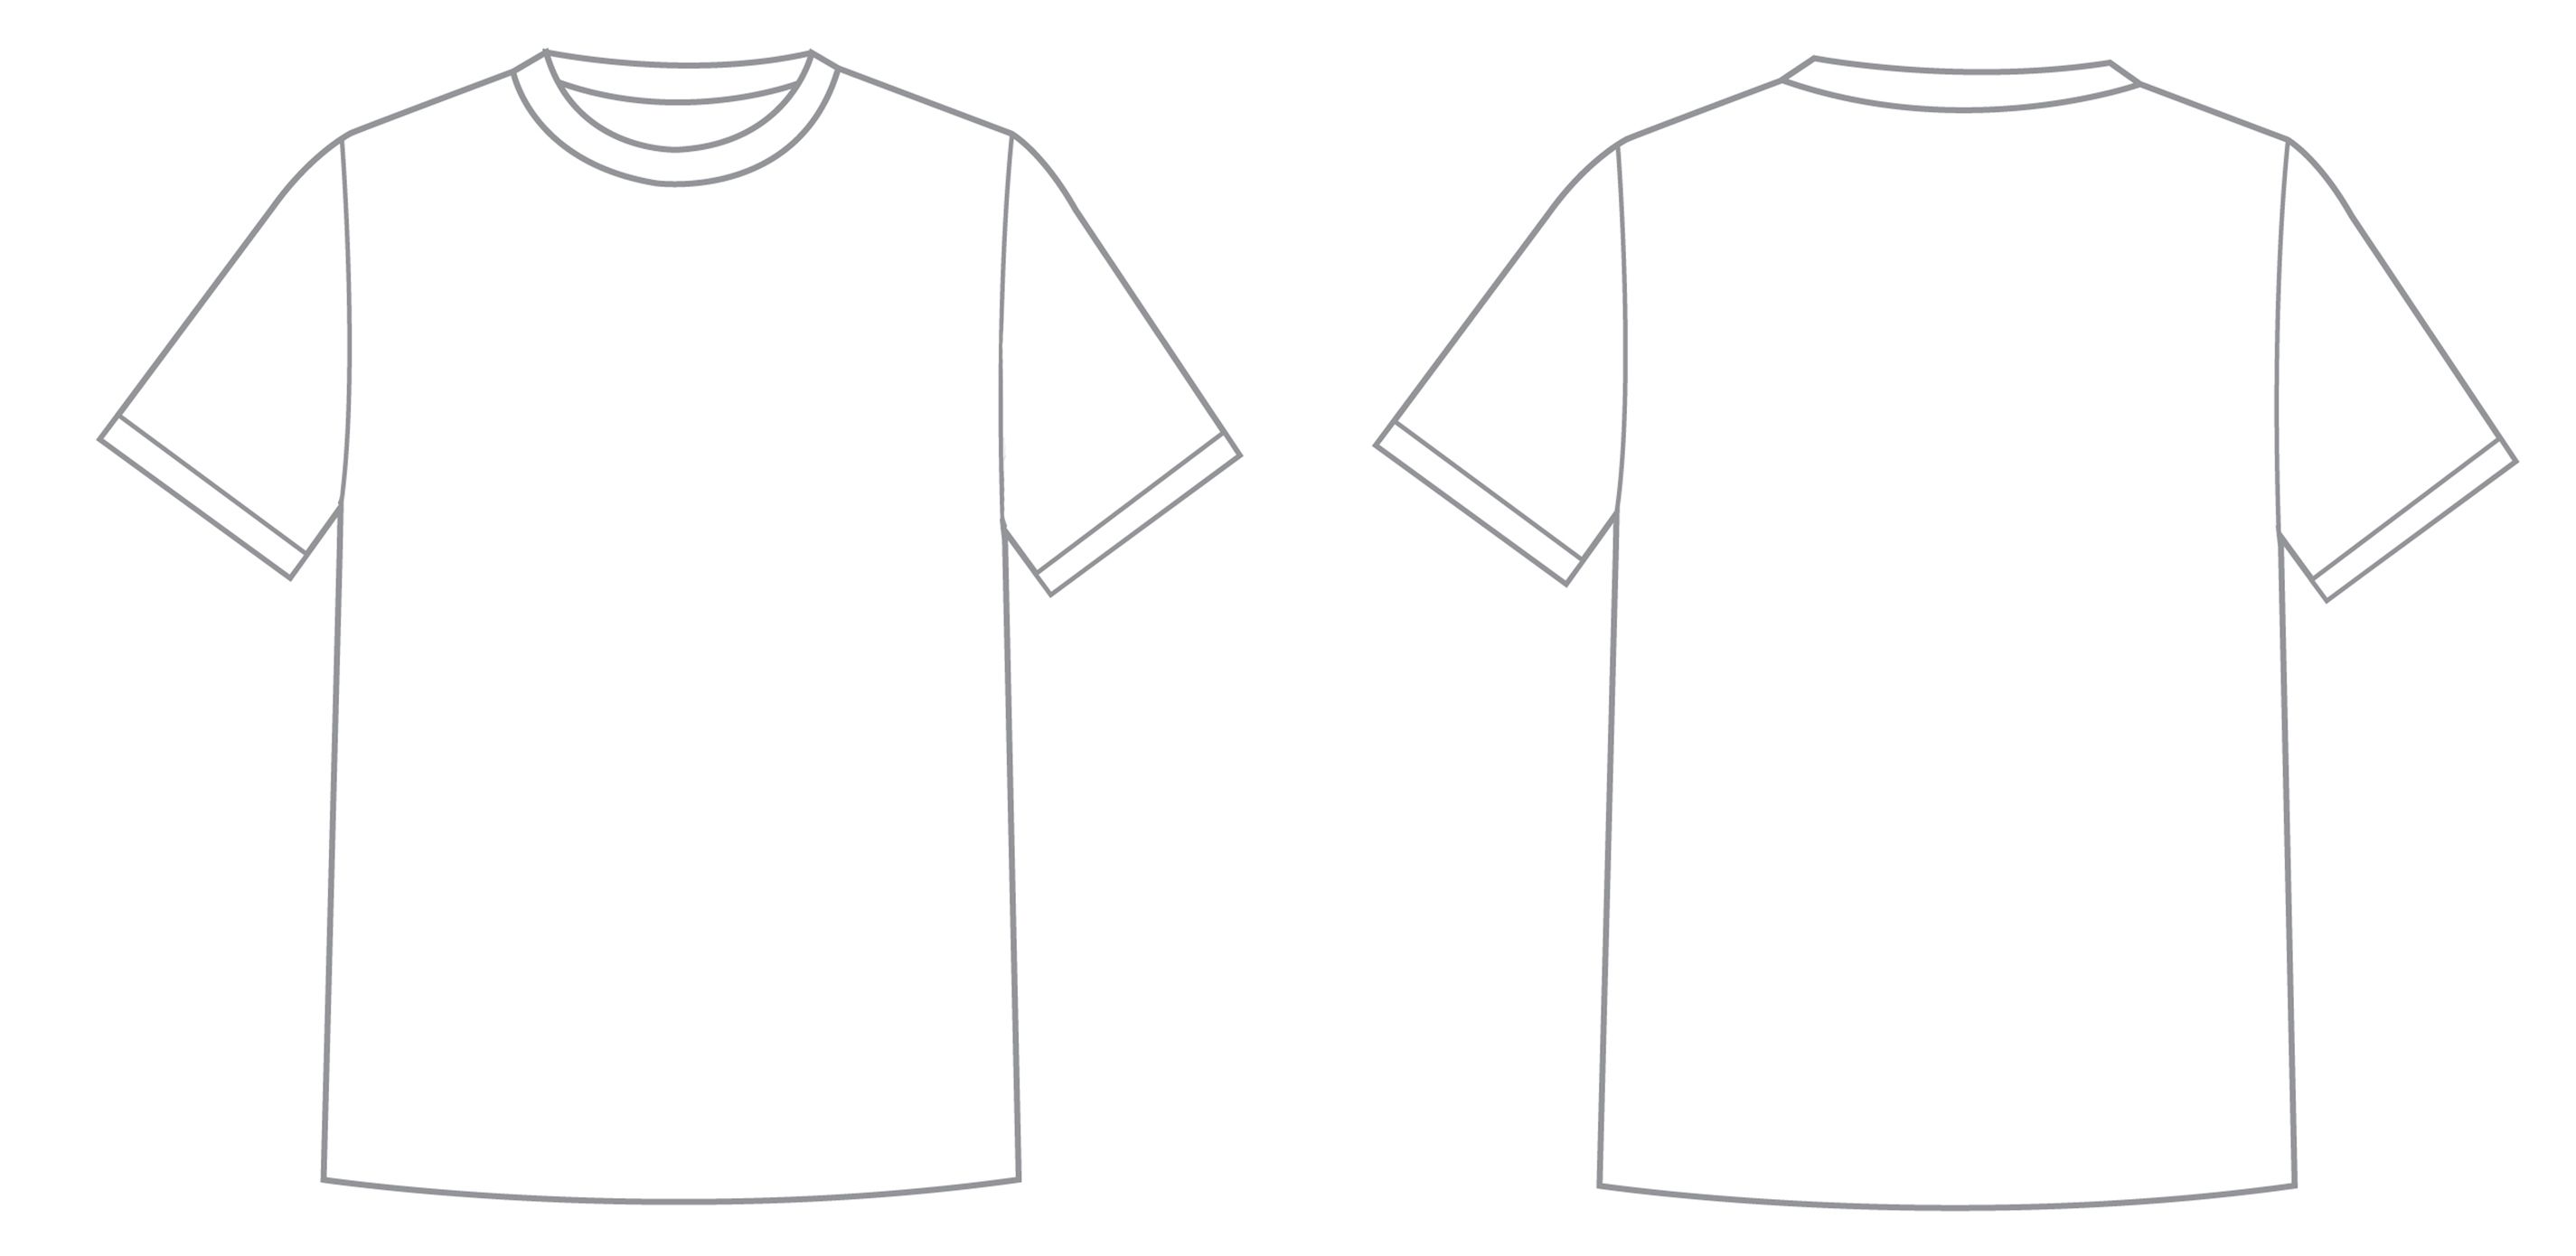 printable t-shirt design template